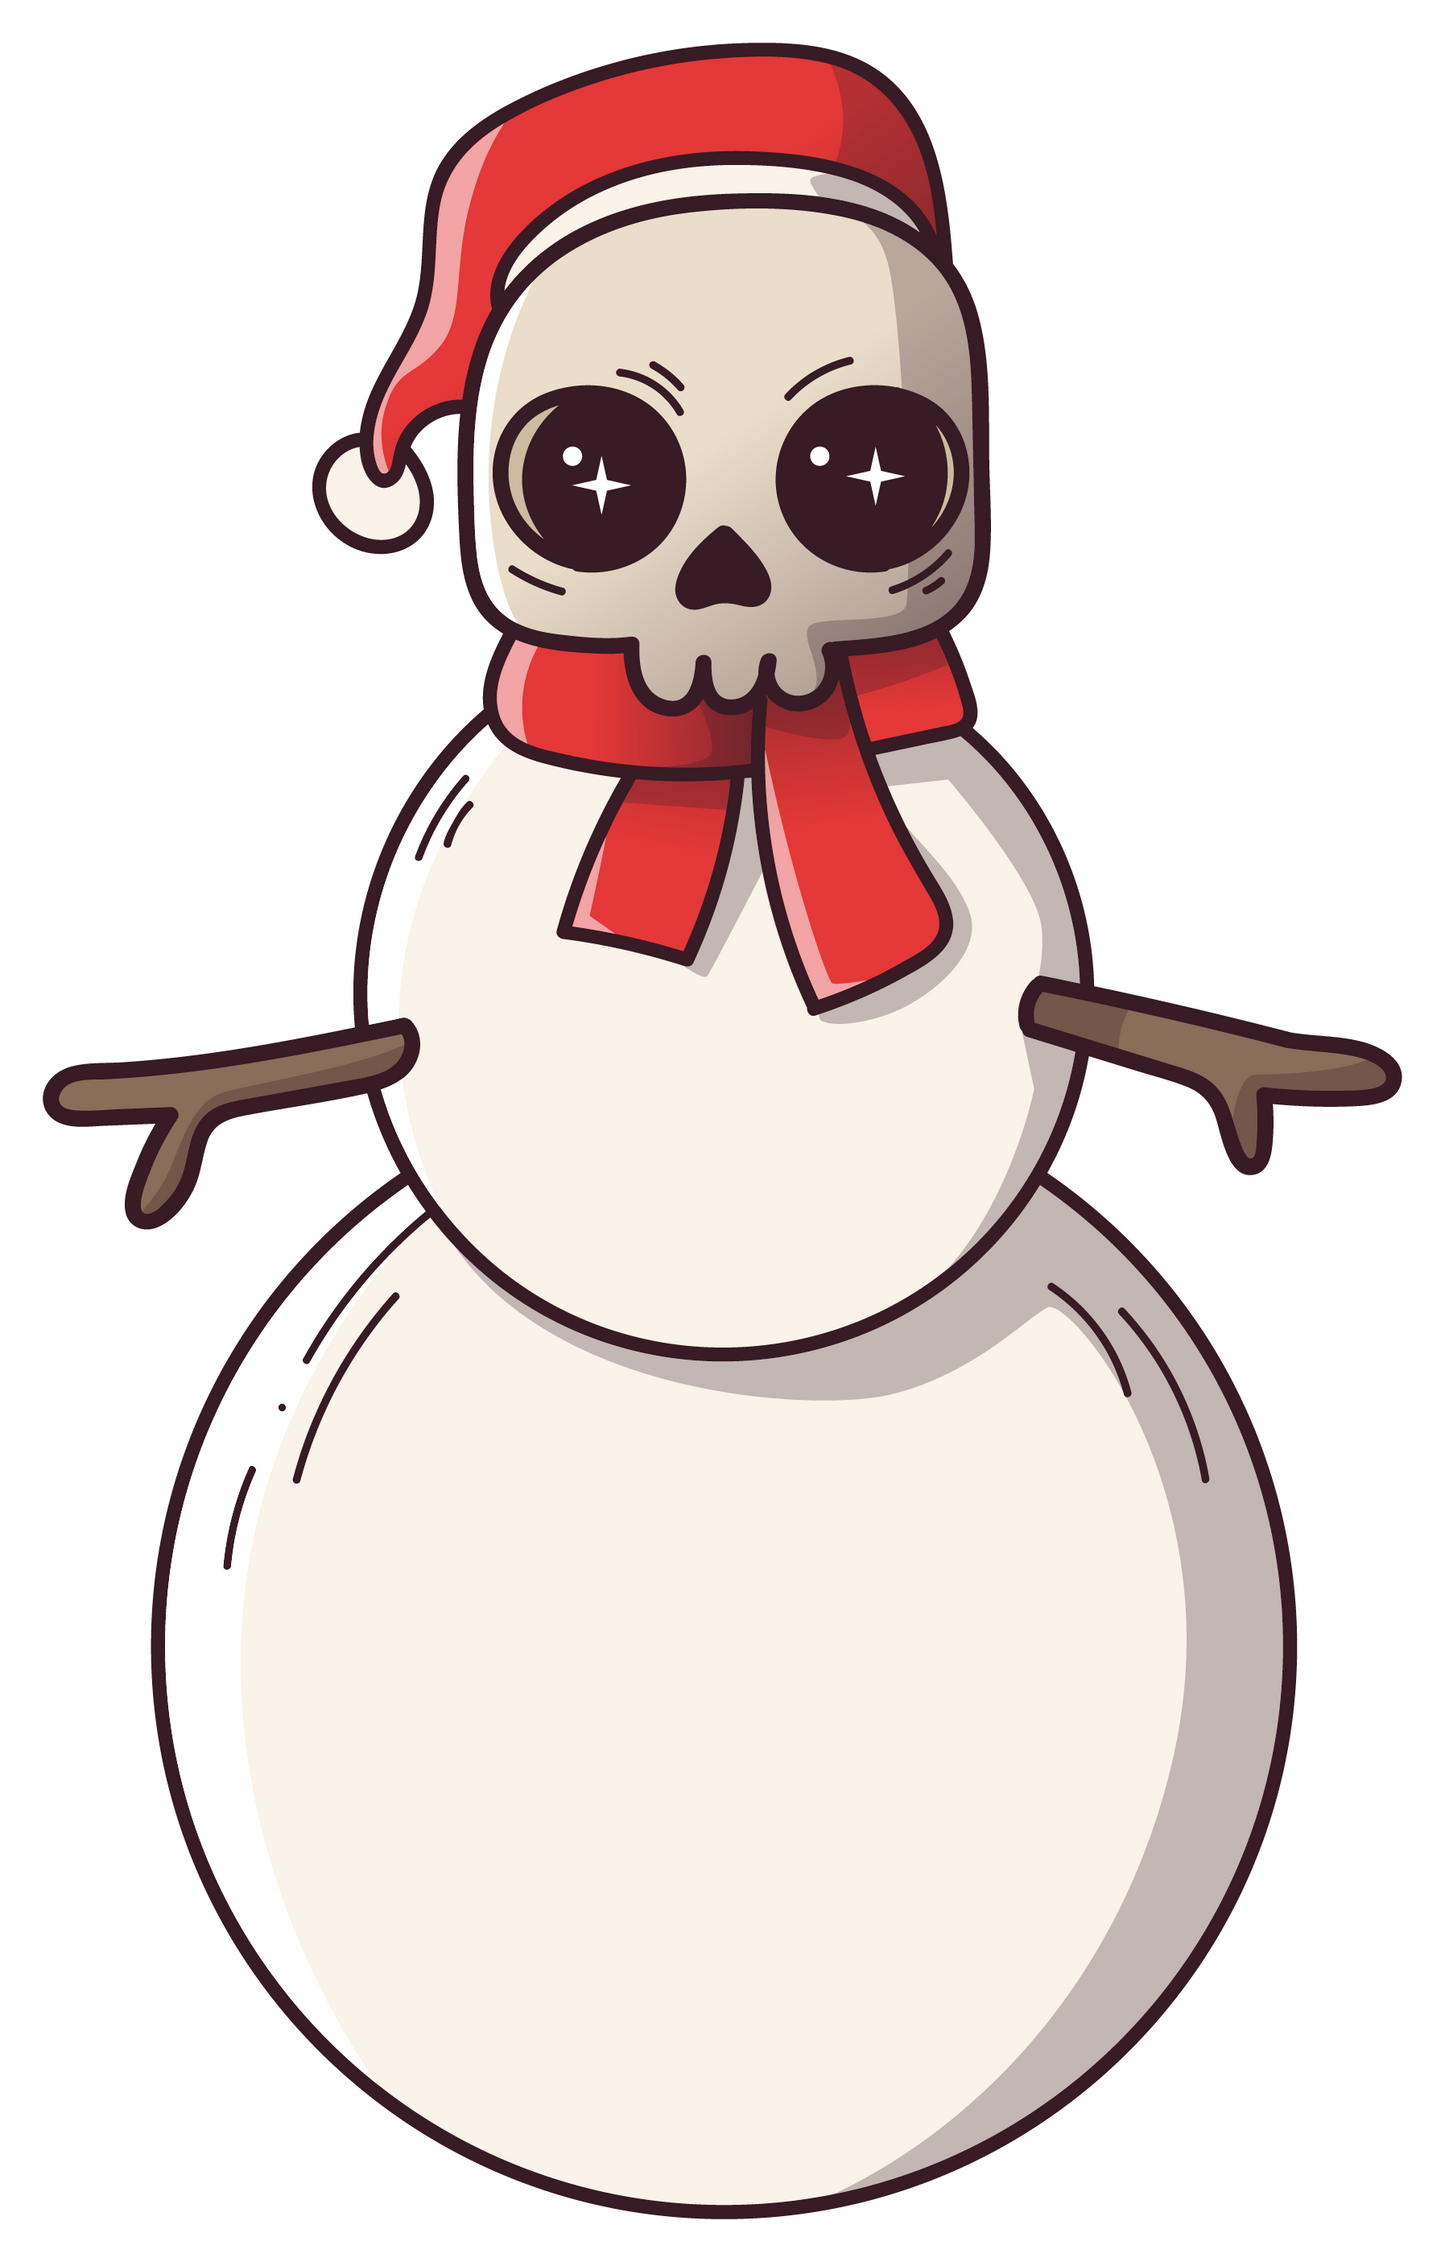 Stickers - Skull Snowman Sticker, Christmas Stickers